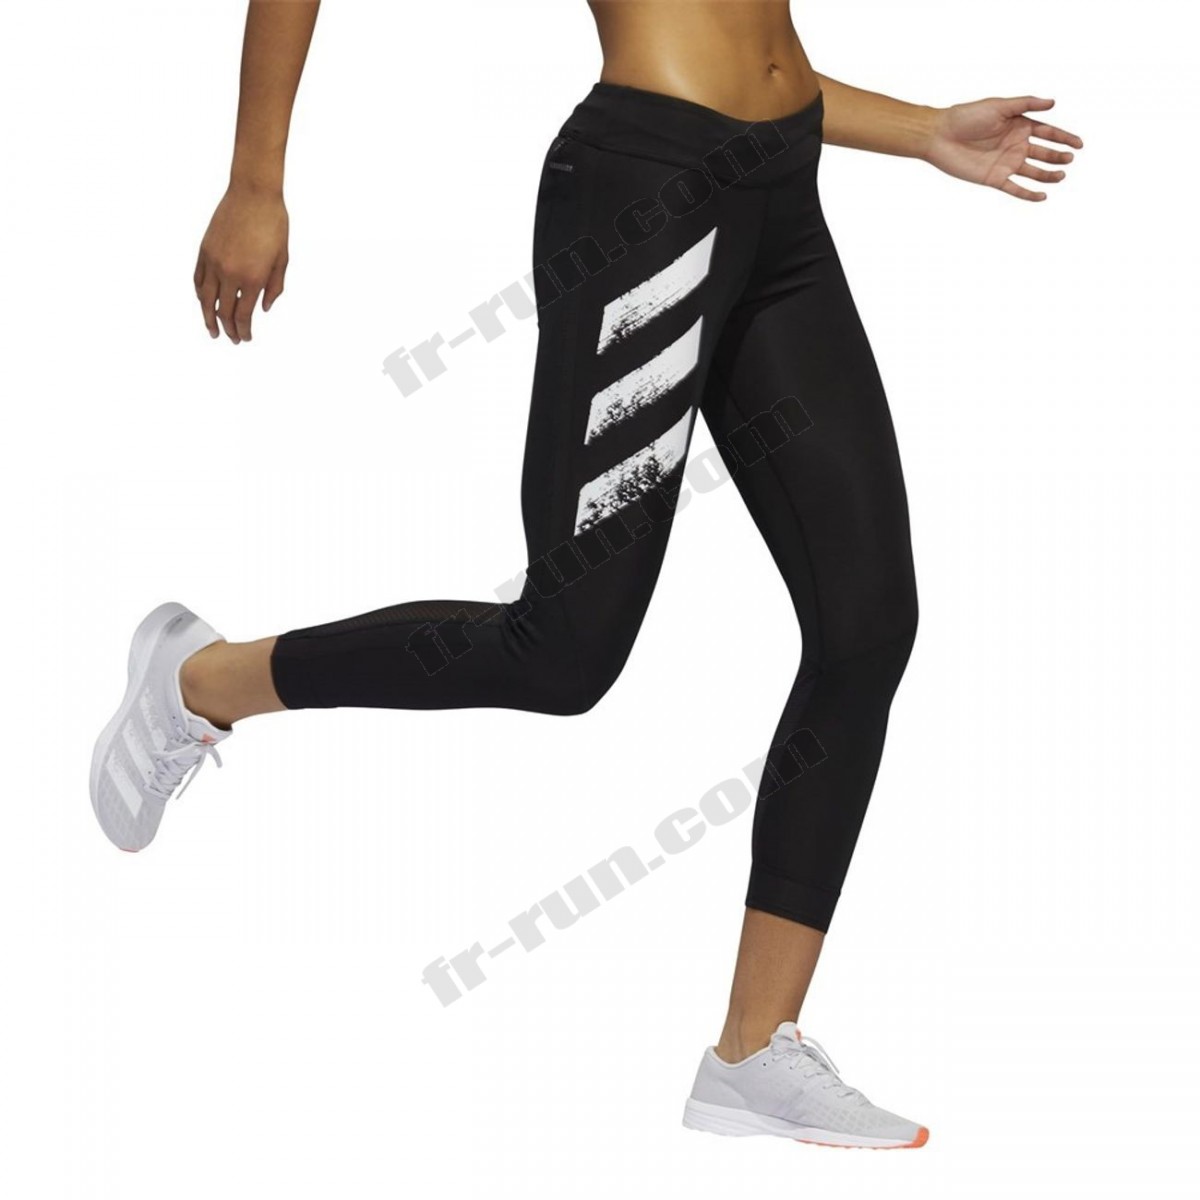 Adidas/running femme ADIDAS Adidas Own The Run √ Nouveau style √ Soldes - -11